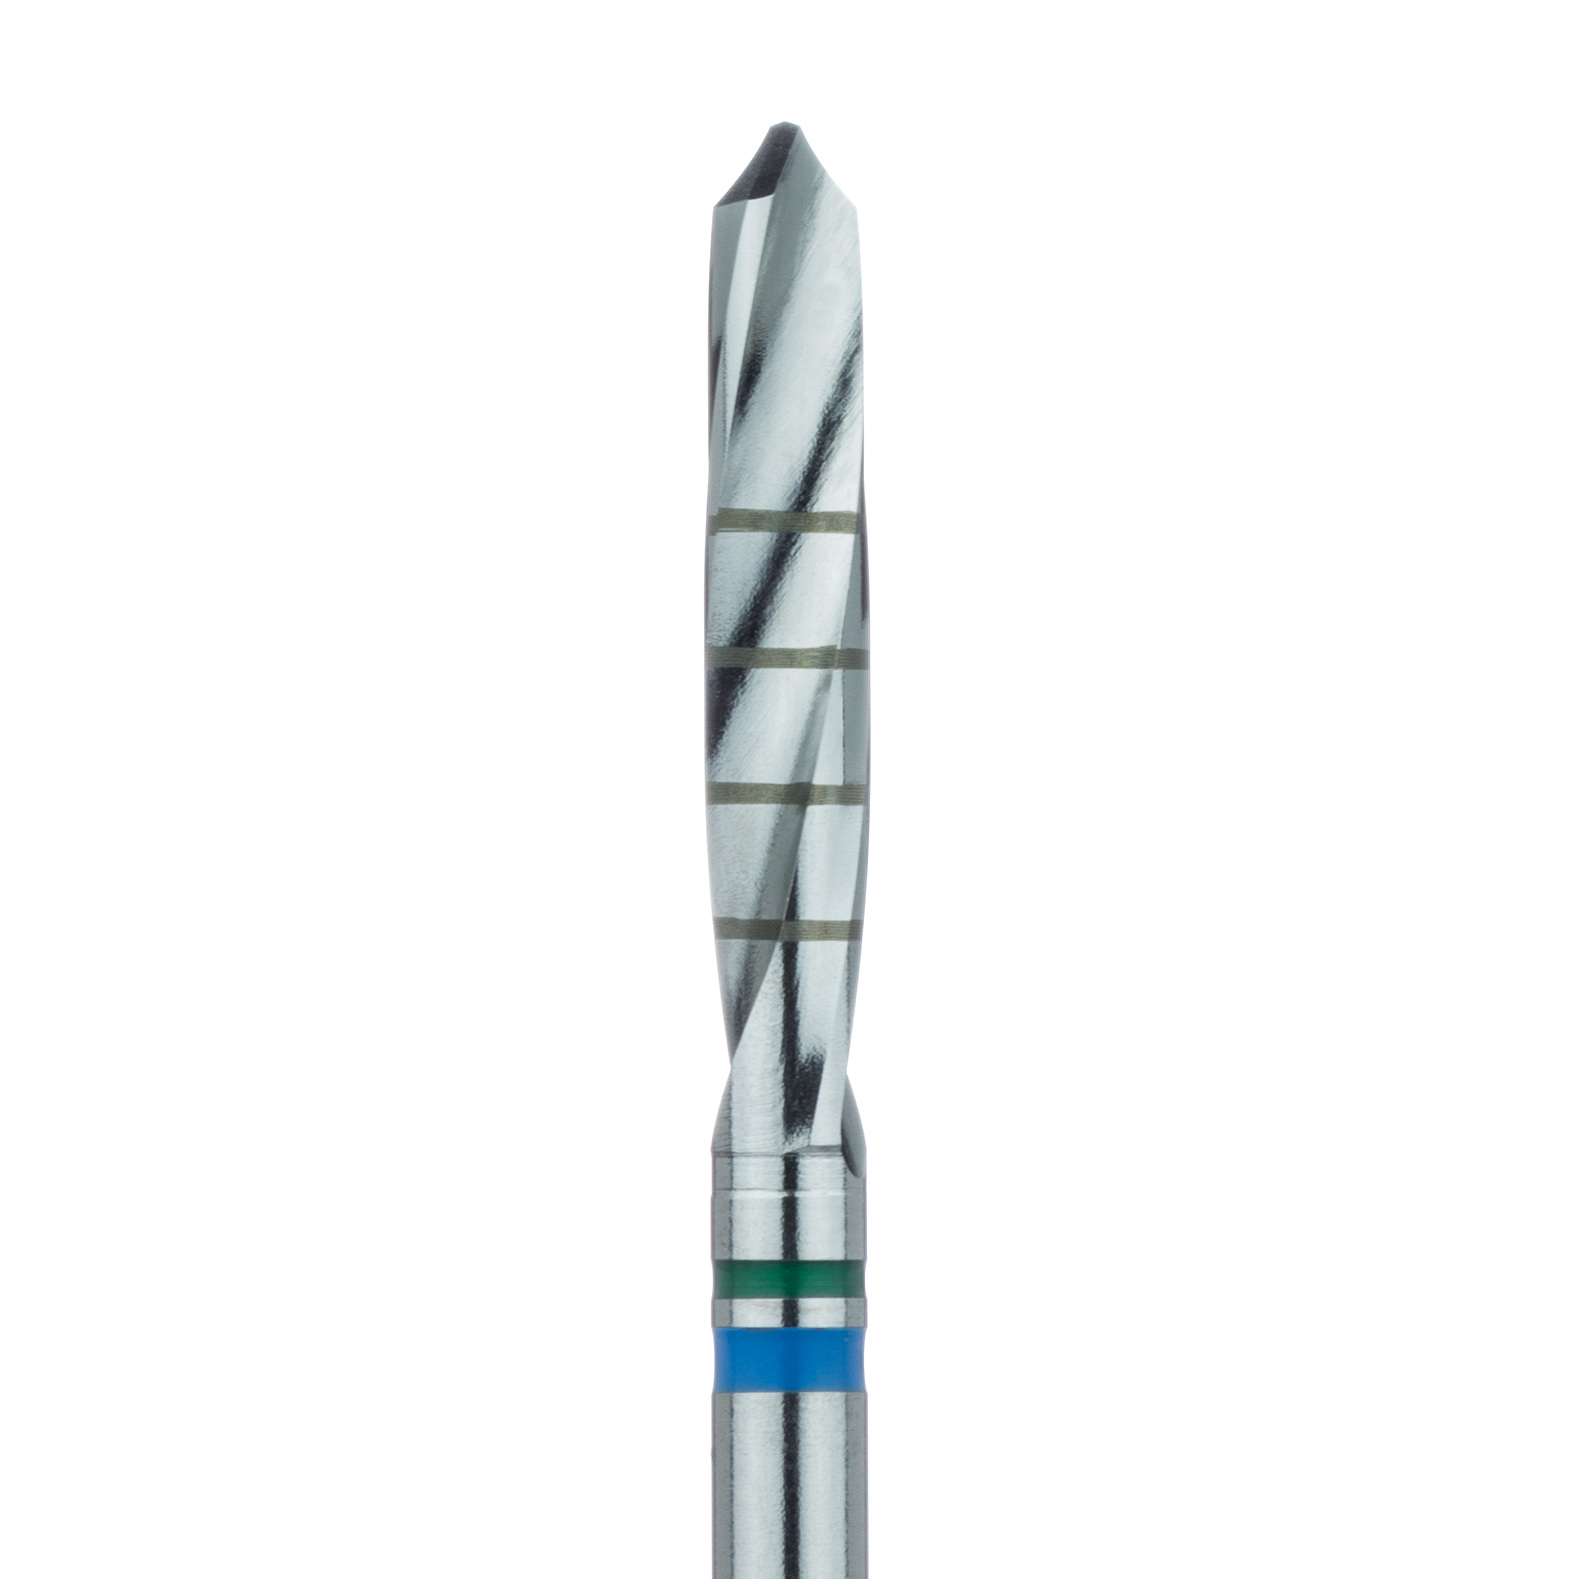 F1001-025-RAXL Surgery, Green / Blue Pilot Bur, 2.5mm Ø, Length 15mm, RAXL